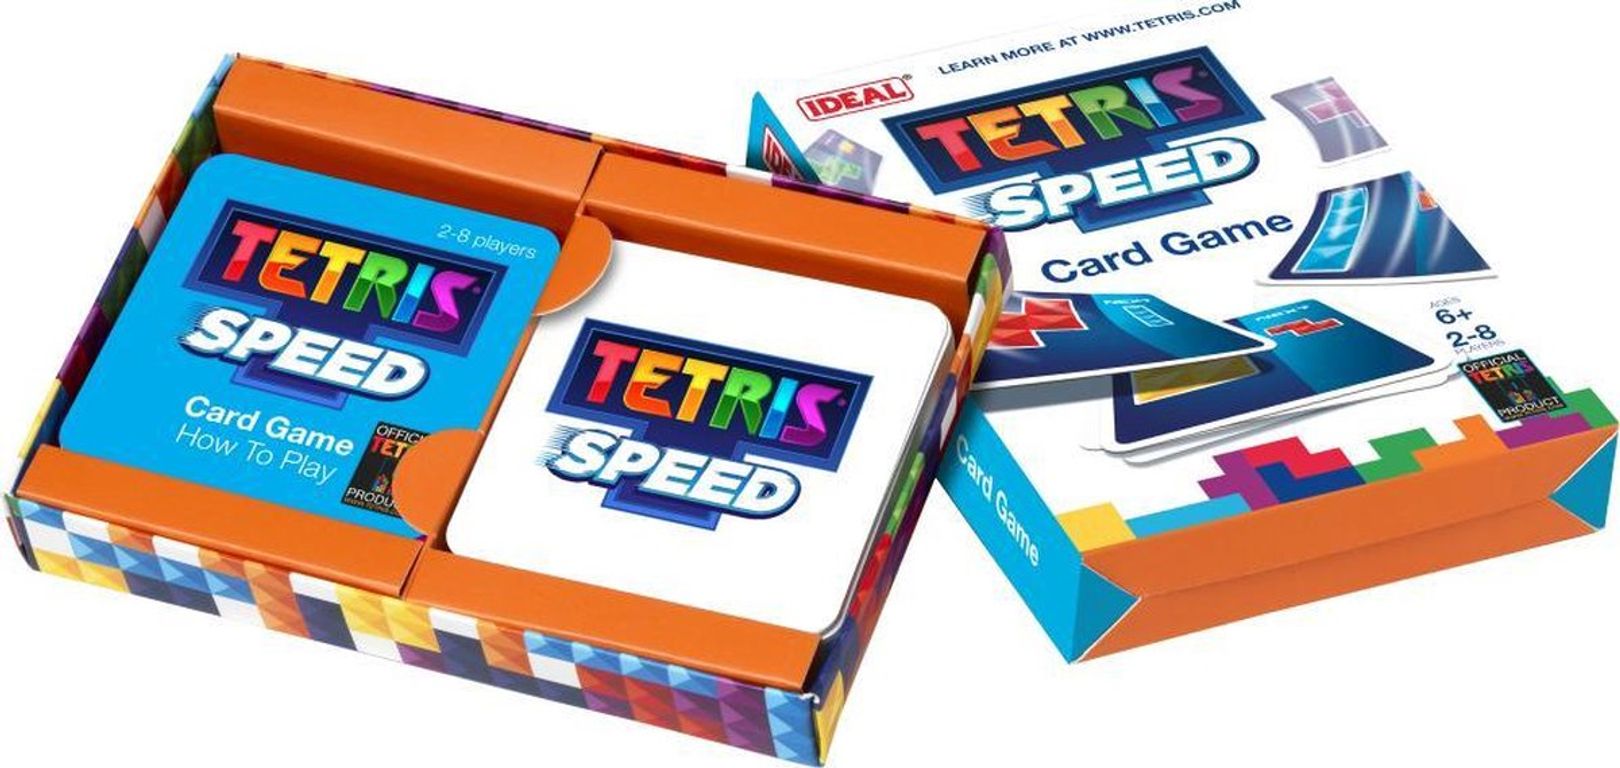 Tetris Speed komponenten